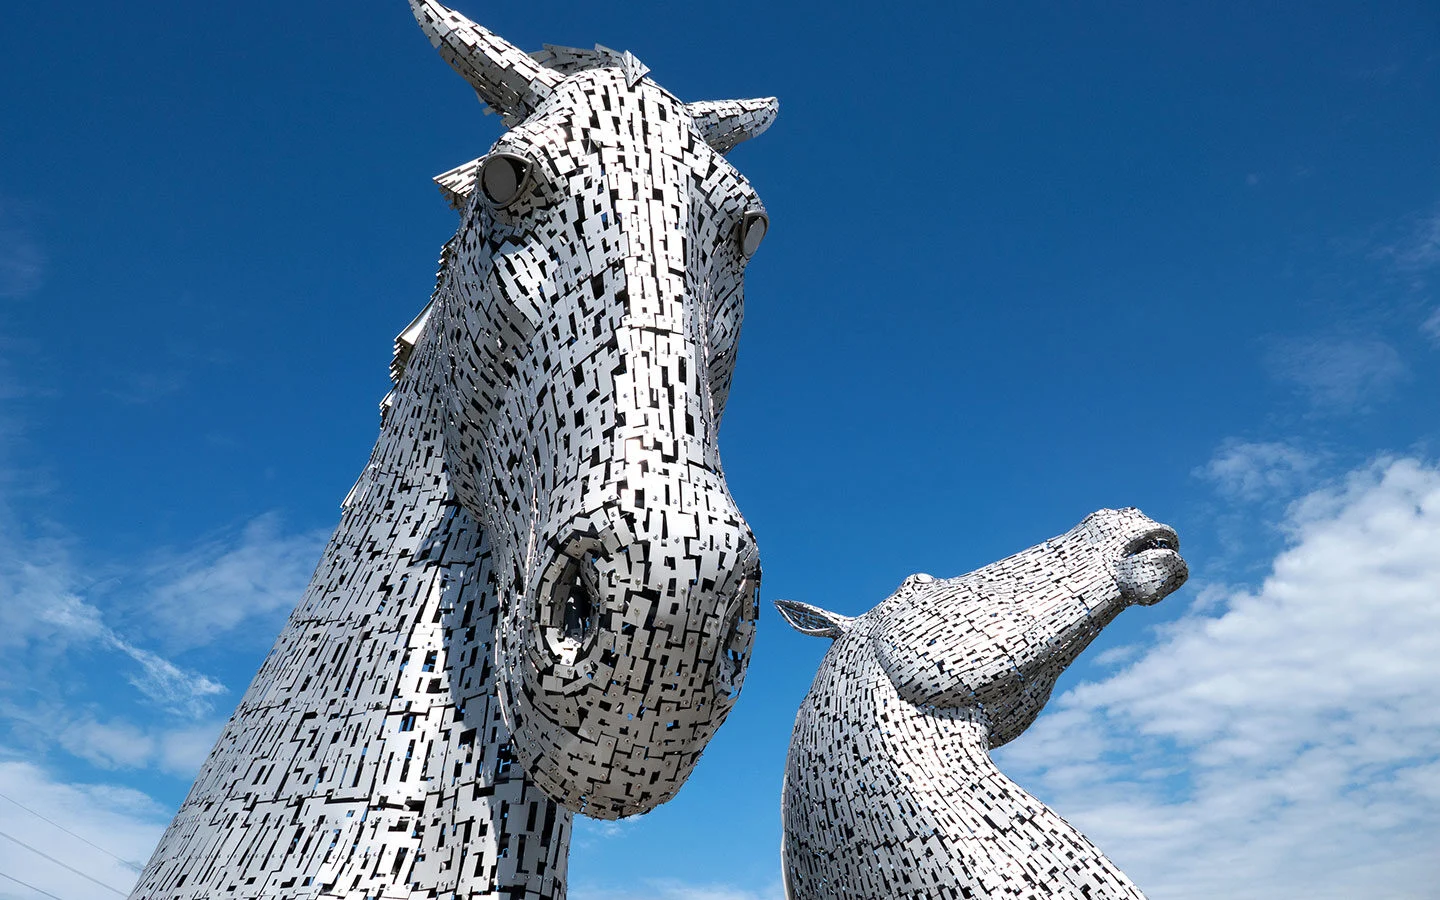 The Kelpies horse sculptures at Falkirk near Edinburgh